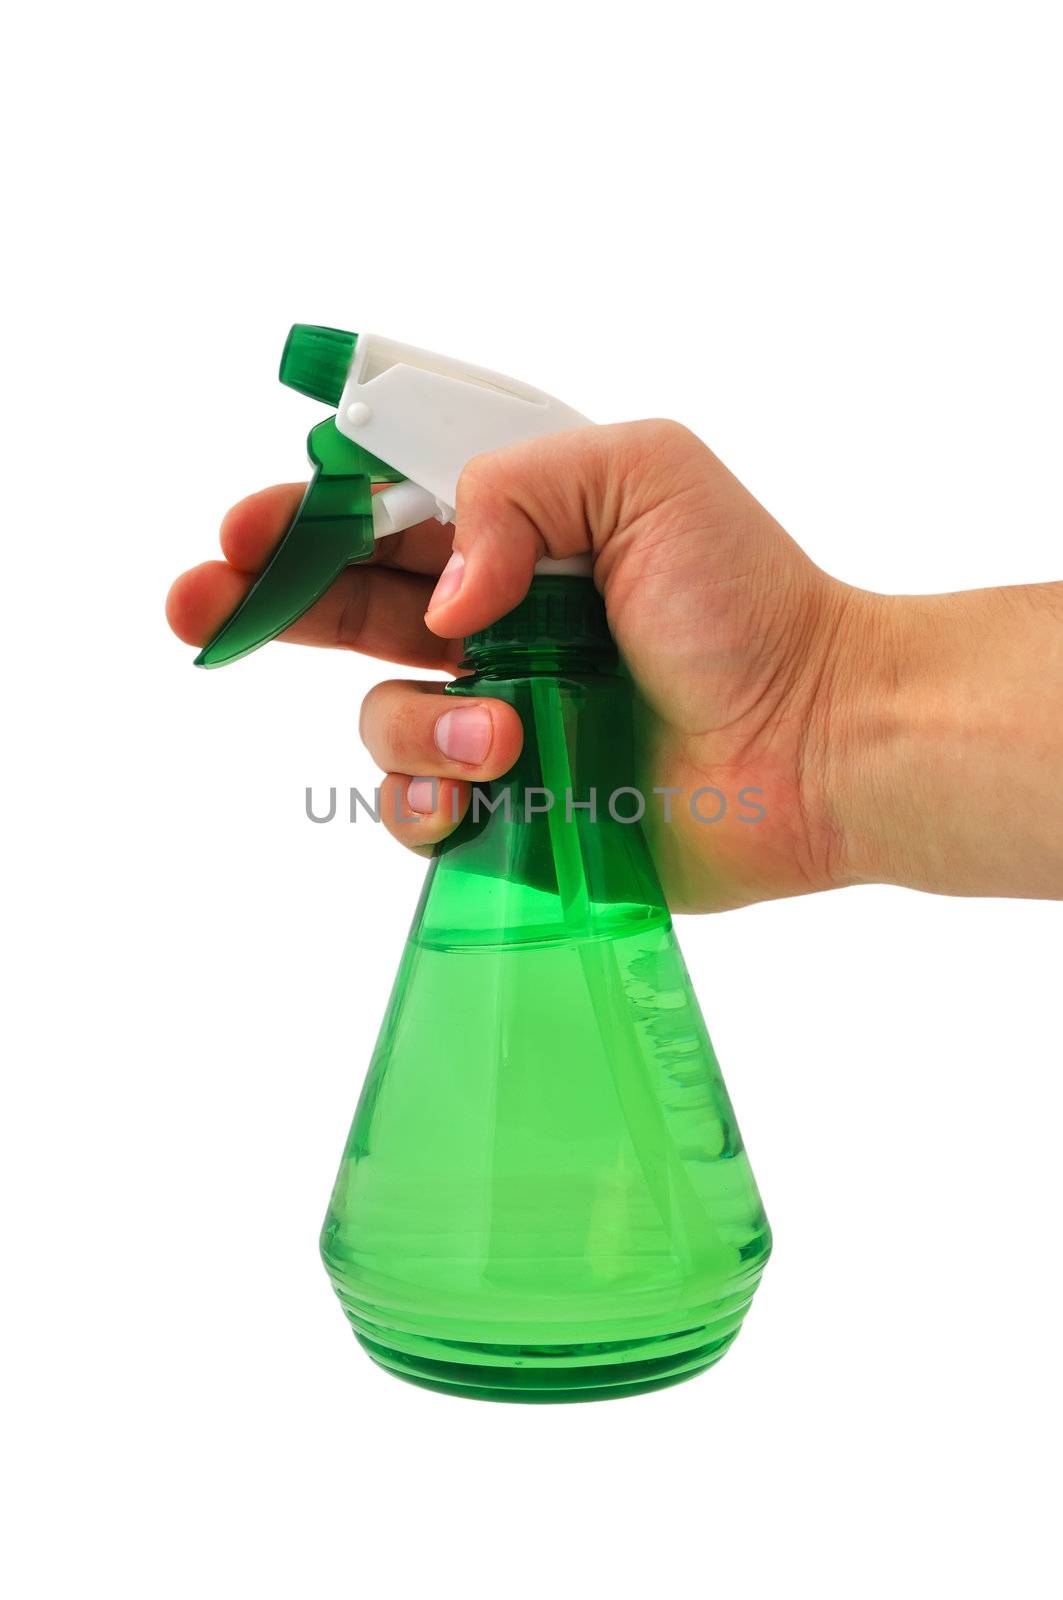 sprayer in hand on a white background